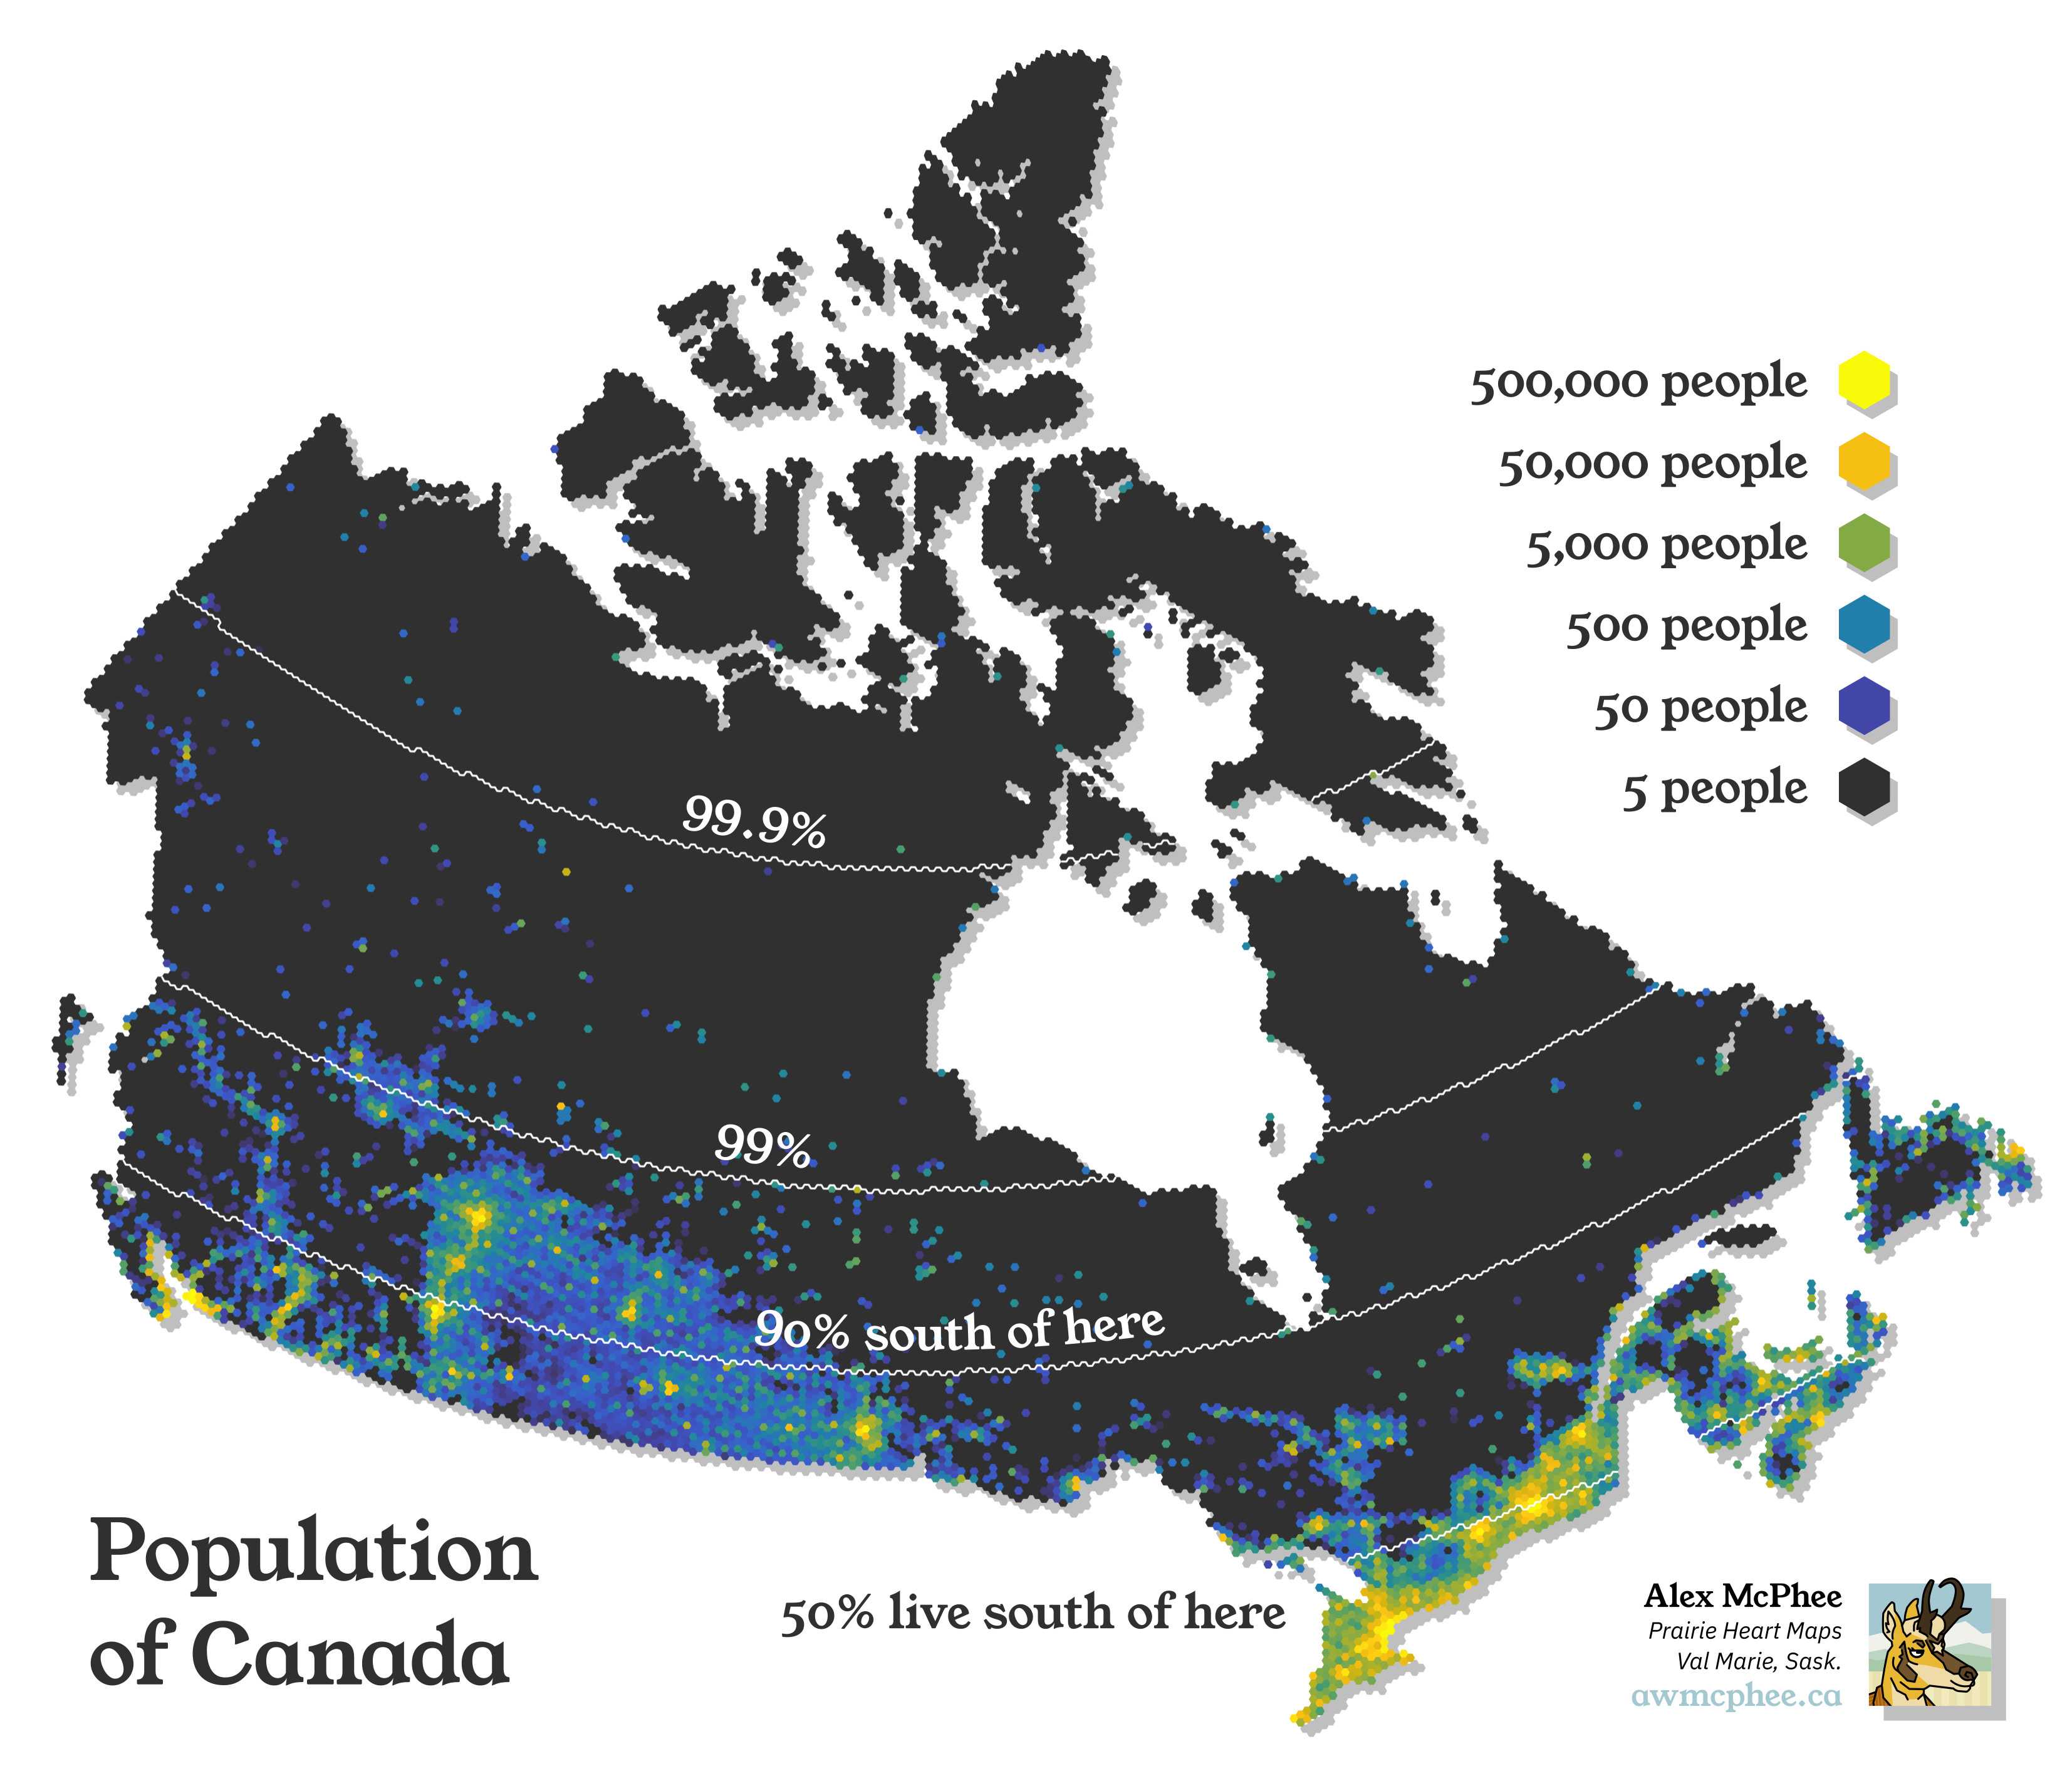 A hexagonal bin map of Canada's population density.